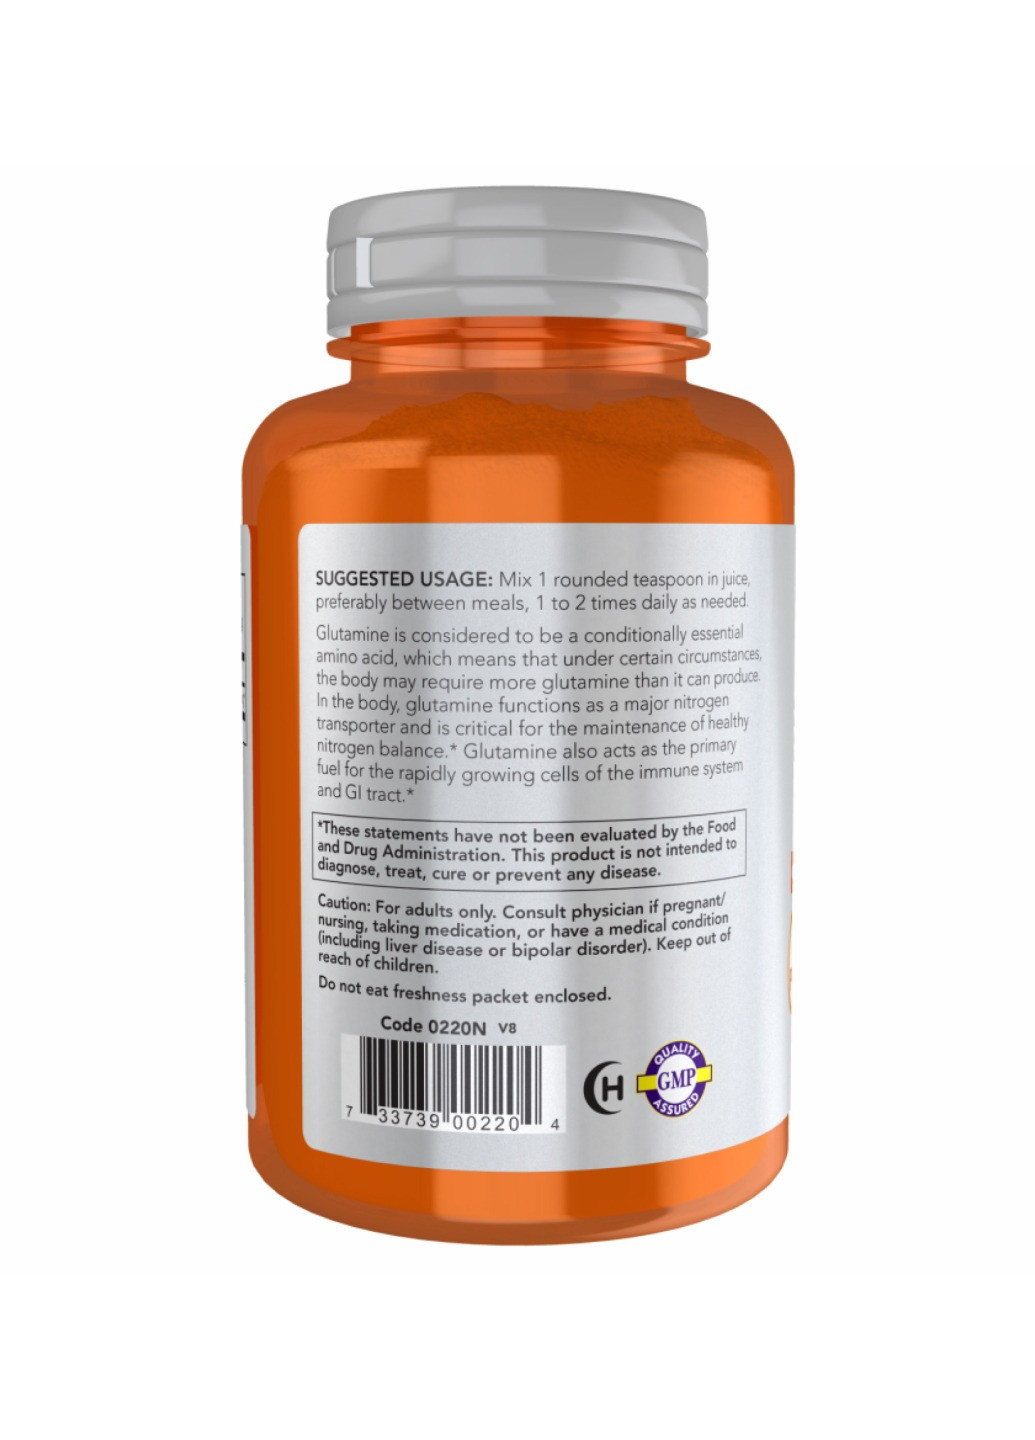 L-глутамин для восстановления L-Glutamine Powder - 1000g Now Foods (273182978)